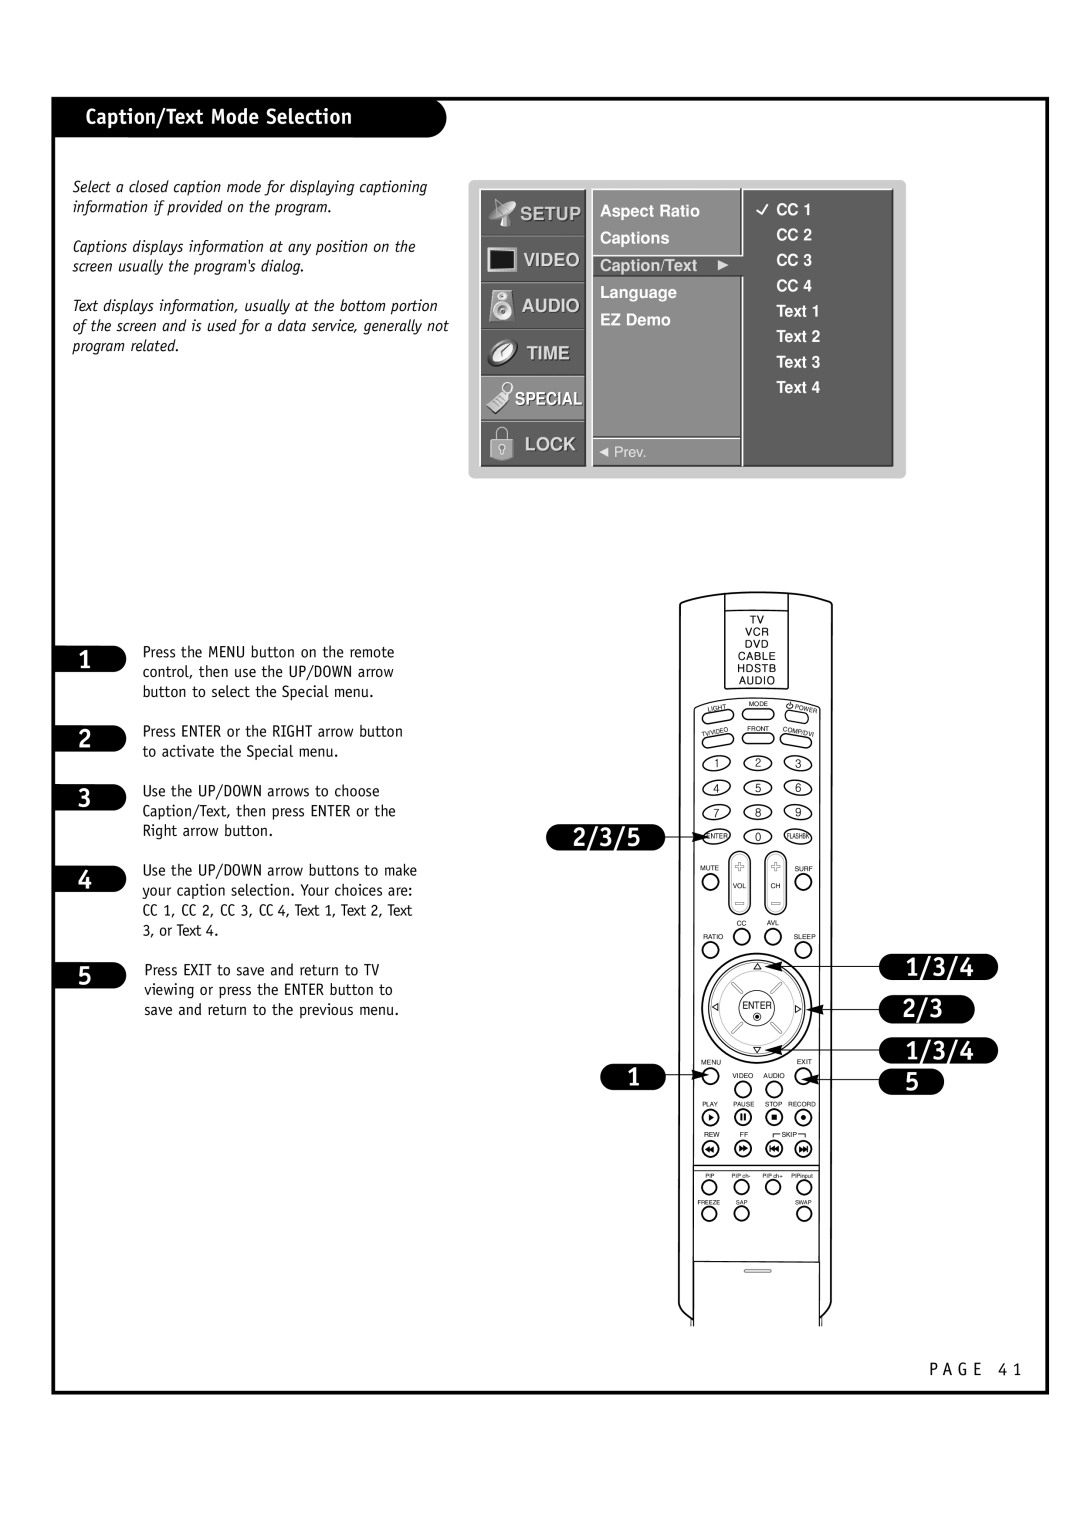 LG Electronics RU-48SZ40 Caption/Text Mode Selection, 2/3/5, 1/3/4 2/3 1/3/4, Setup, Video Audio Time, Special, Lock 